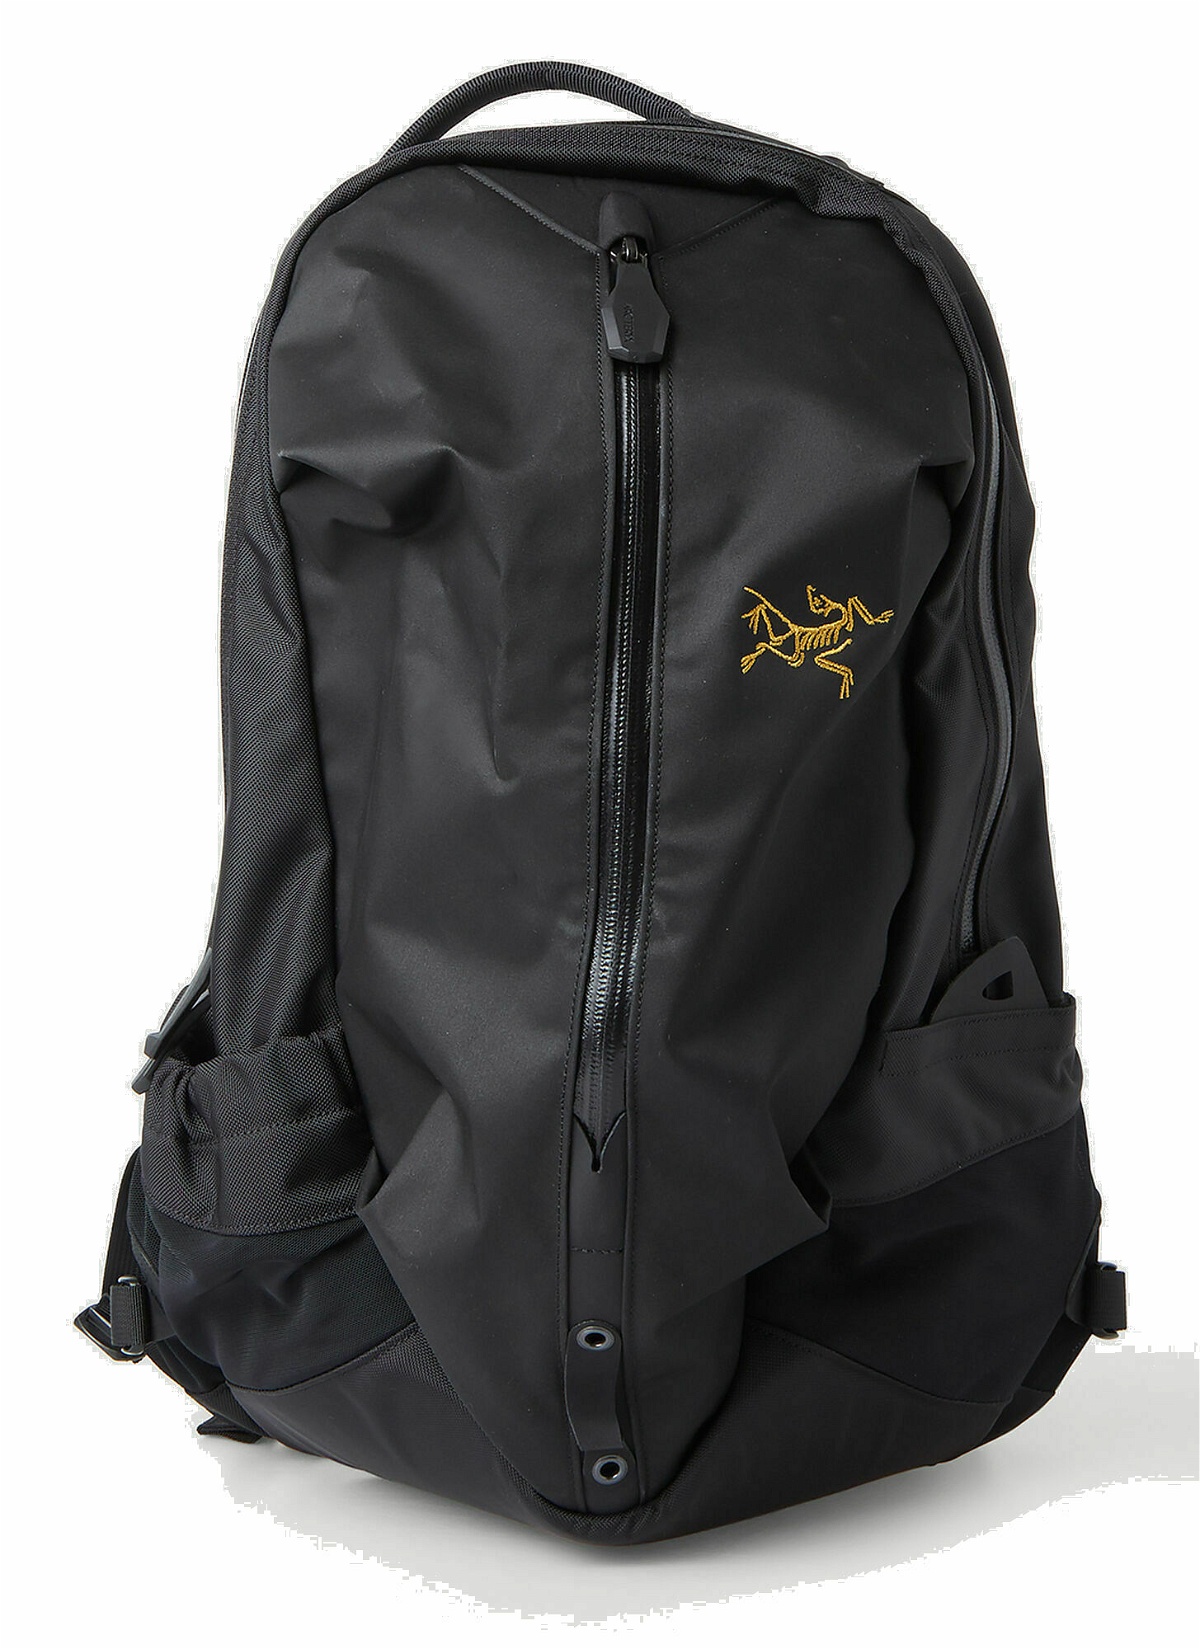 Photo: Arro 16 Backpack in Black